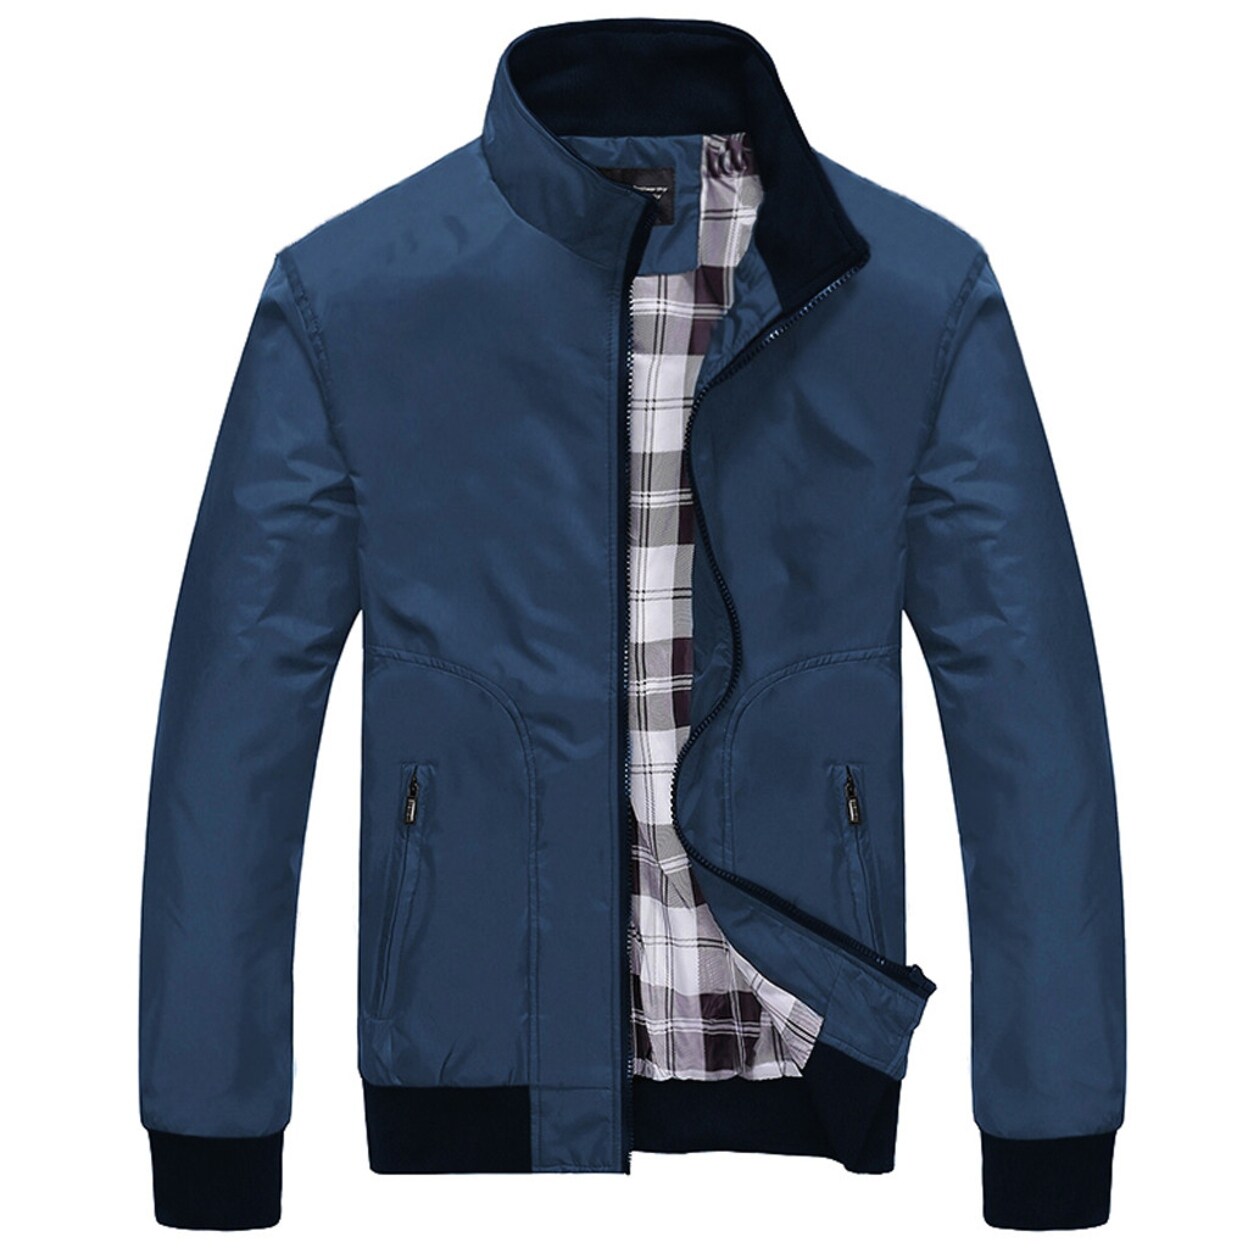 Fineday Mens Coats /& Jackets Mens Autumn Casual Fashion Pure Color Patchwork Jacket Zipper Outwear Coat Clothing for Men